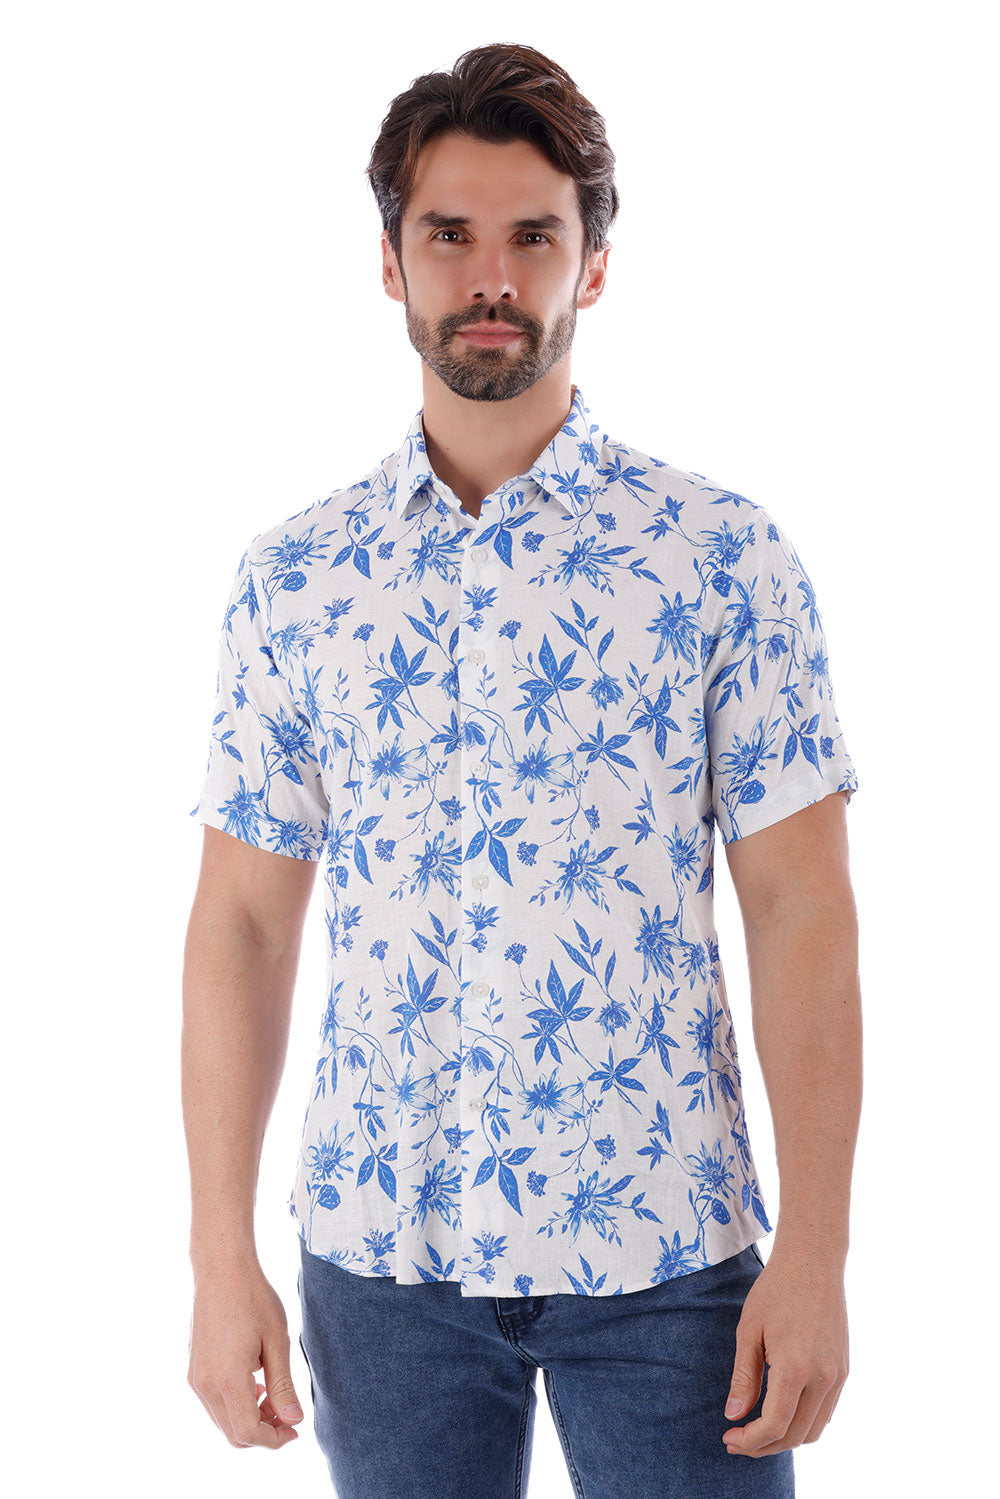 BARABAS Men's Floral Linen Button Down Short Sleeve Shirts 4SST17 White Blue